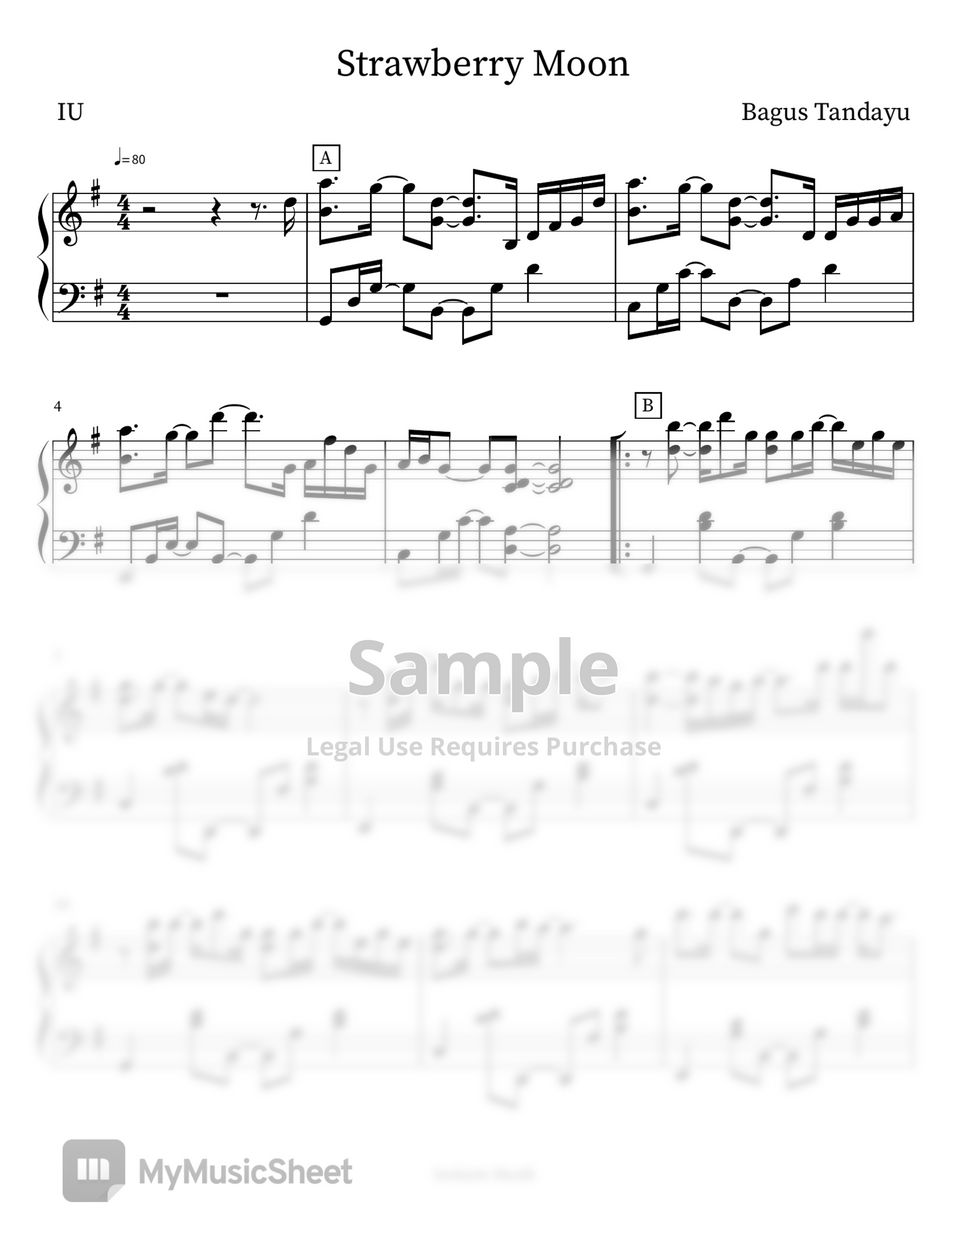 IU - Strawberry Moon (For Intermediate piano) by Bagus Tandayu